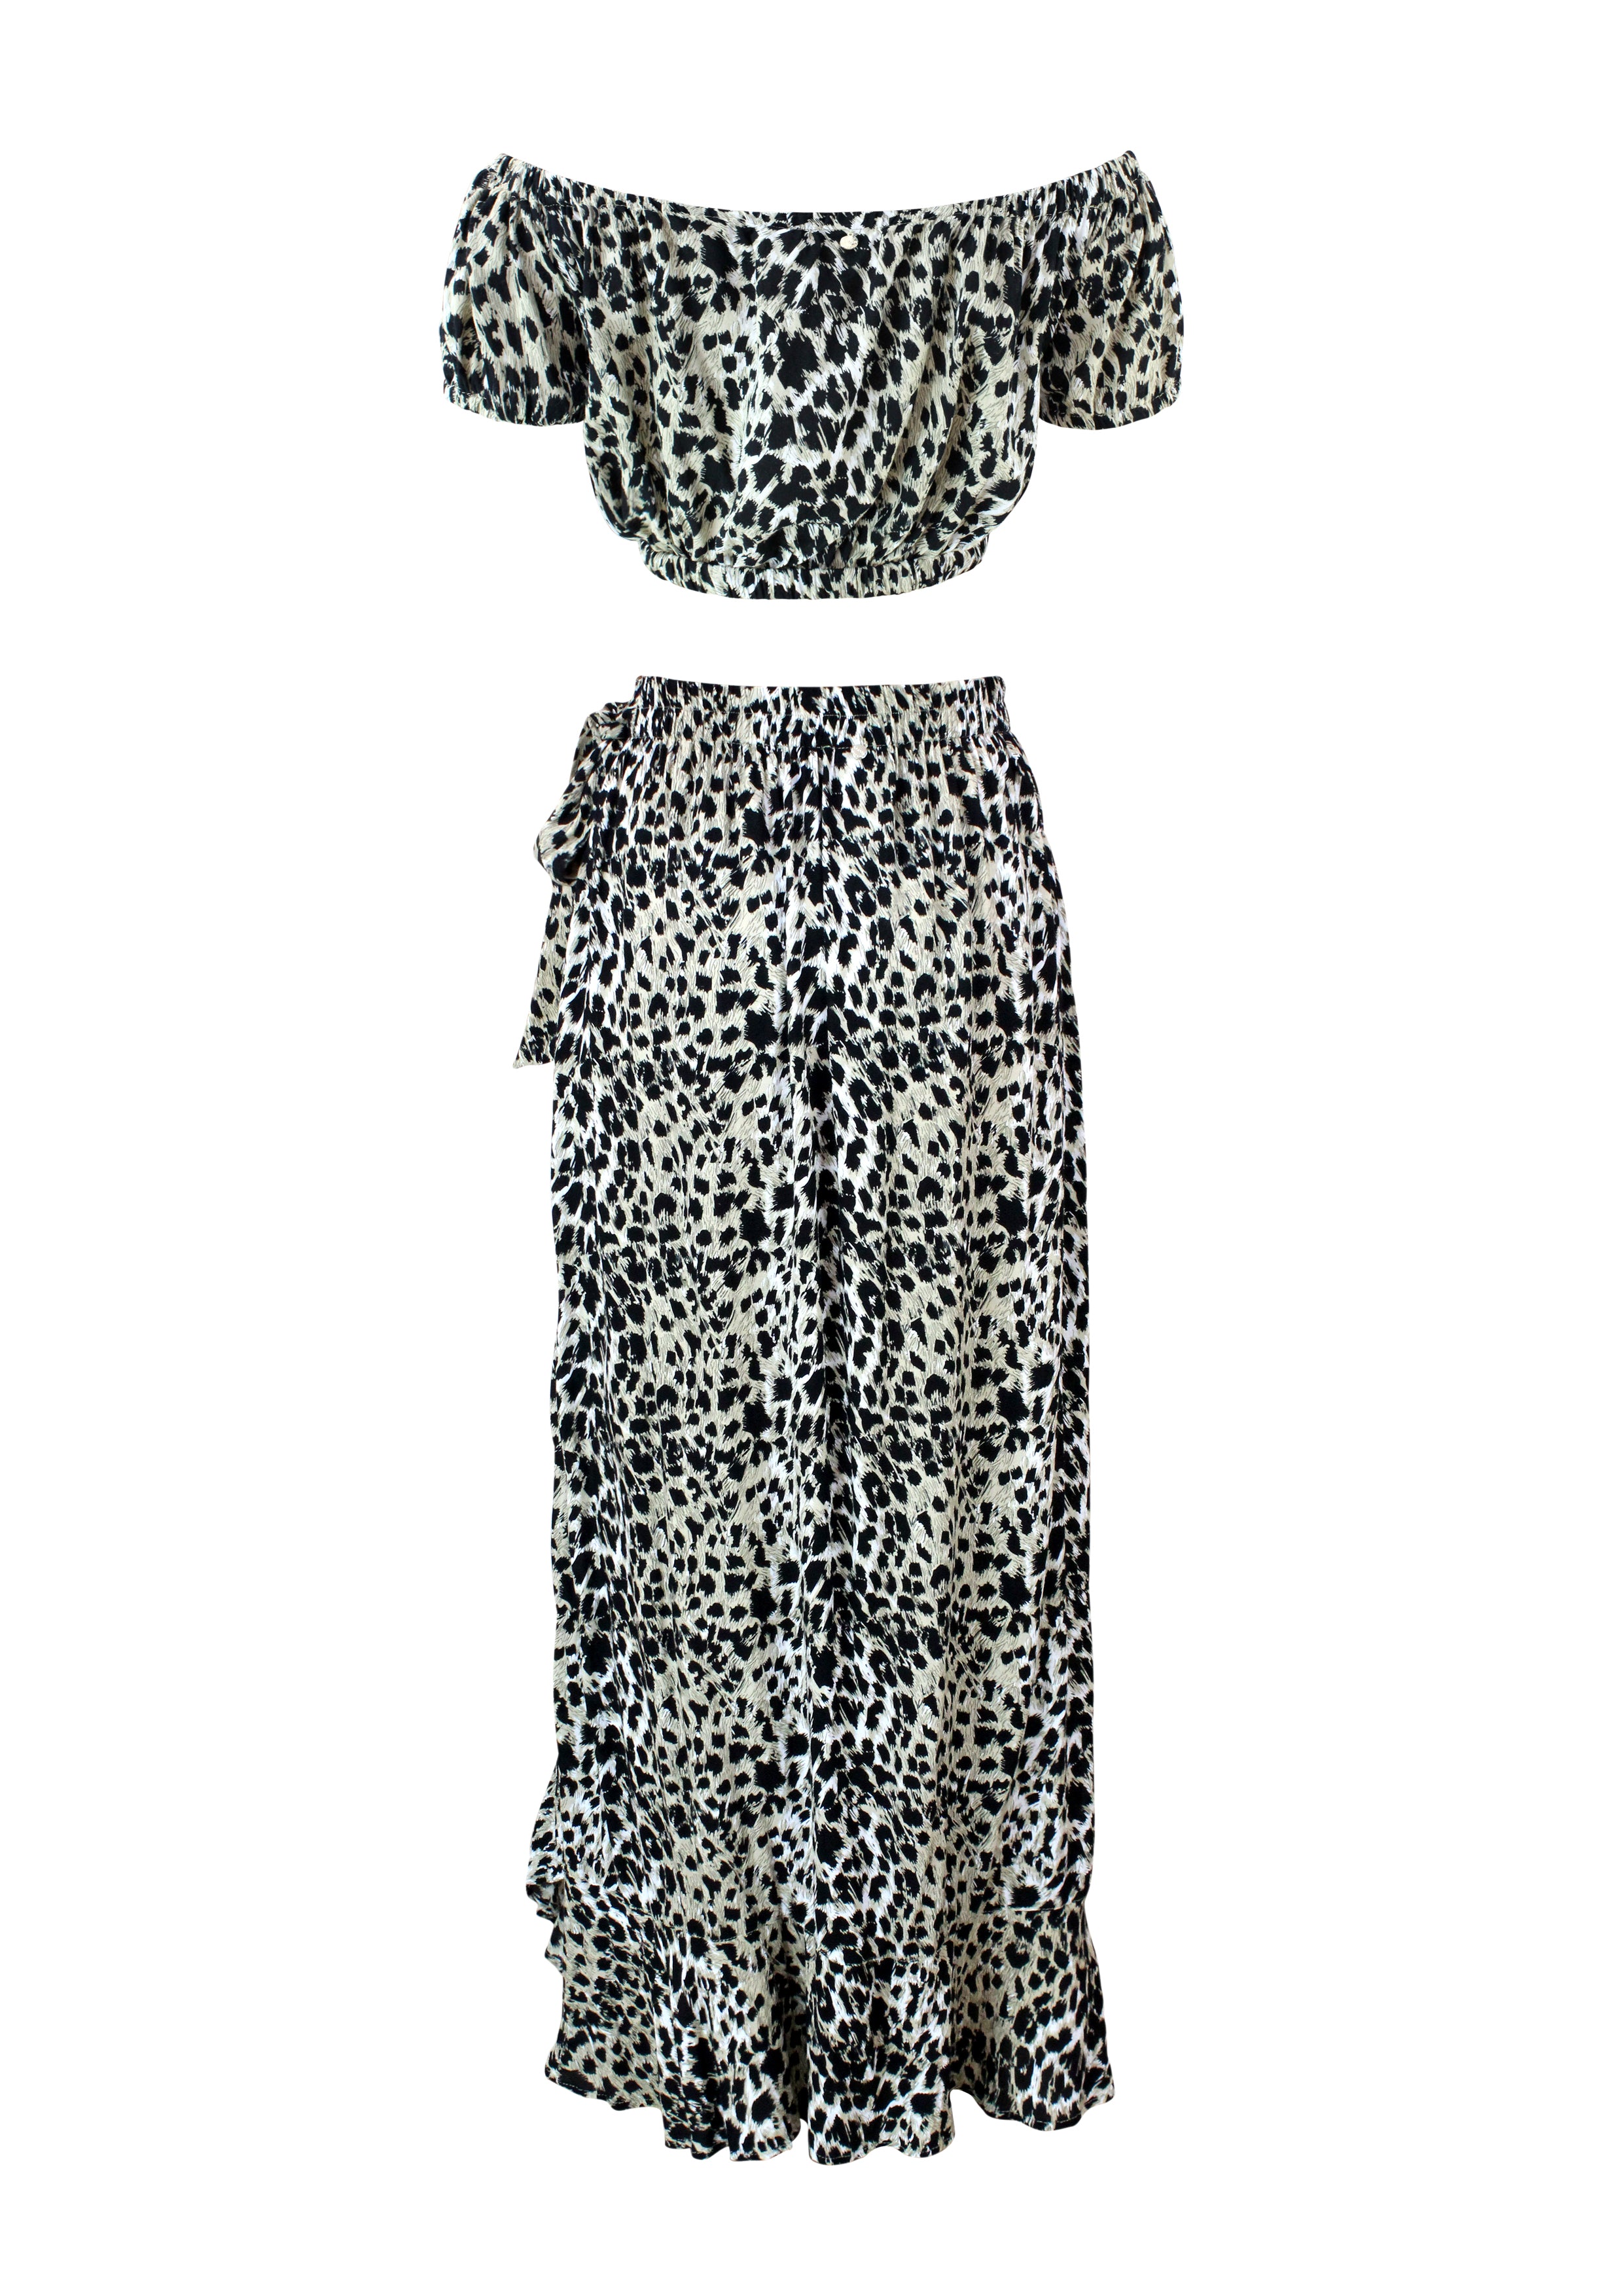 Leopard Black Katya Top and Skirt - Resort Collection